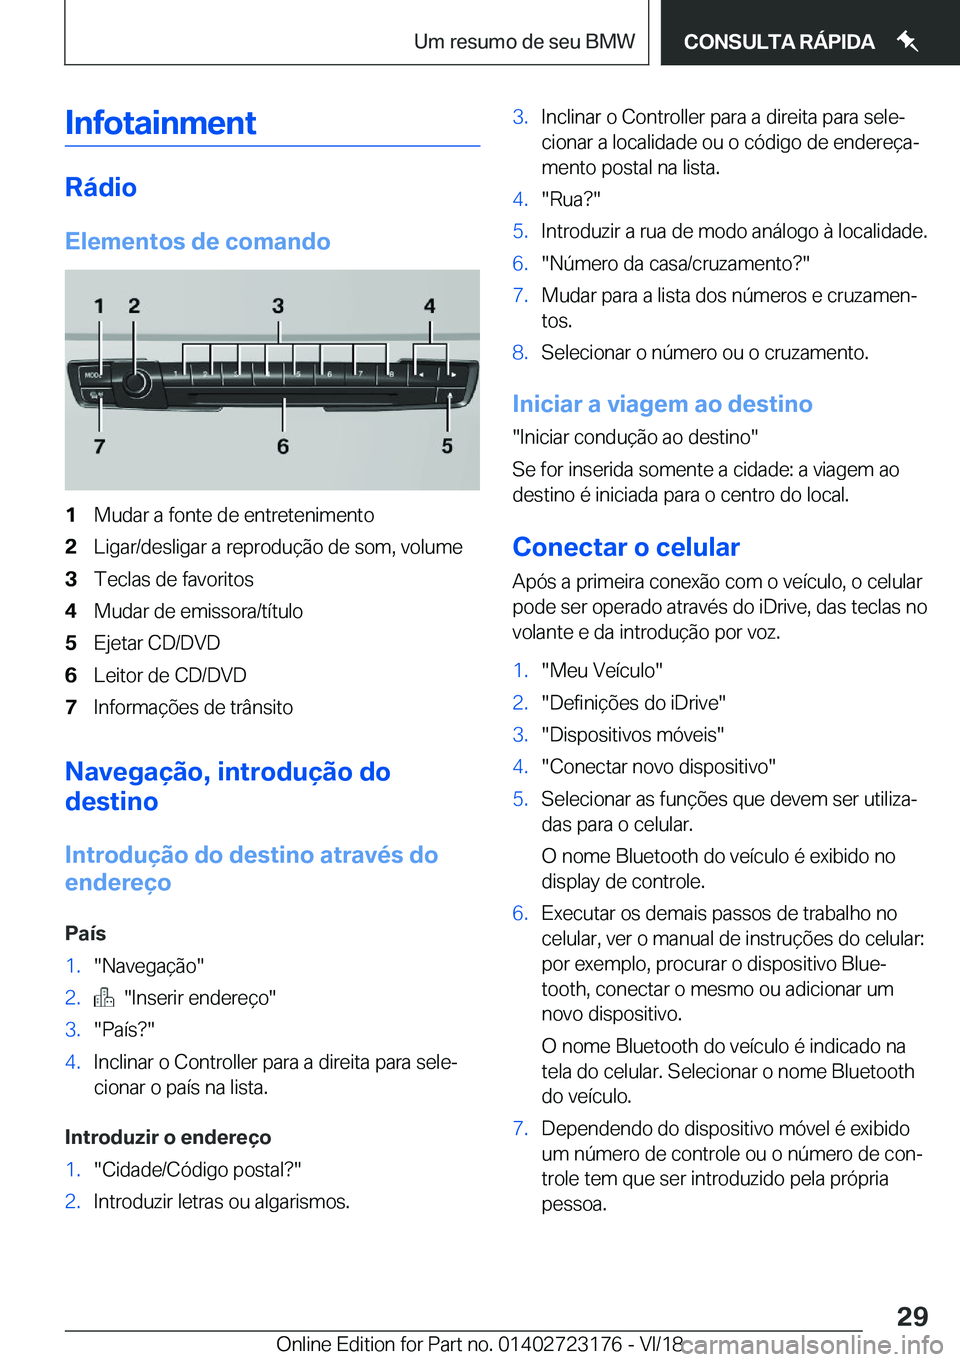 BMW 4 SERIES GRAN COUPE 2019  Manual do condutor (in Portuguese) �I�n�f�o�t�a�i�n�m�e�n�t
�R�á�d�i�o
�E�l�e�m�e�n�t�o�s��d�e��c�o�m�a�n�d�o
�1�M�u�d�a�r��a��f�o�n�t�e��d�e��e�n�t�r�e�t�e�n�i�m�e�n�t�o�2�L�i�g�a�r�/�d�e�s�l�i�g�a�r��a��r�e�p�r�o�d�u�